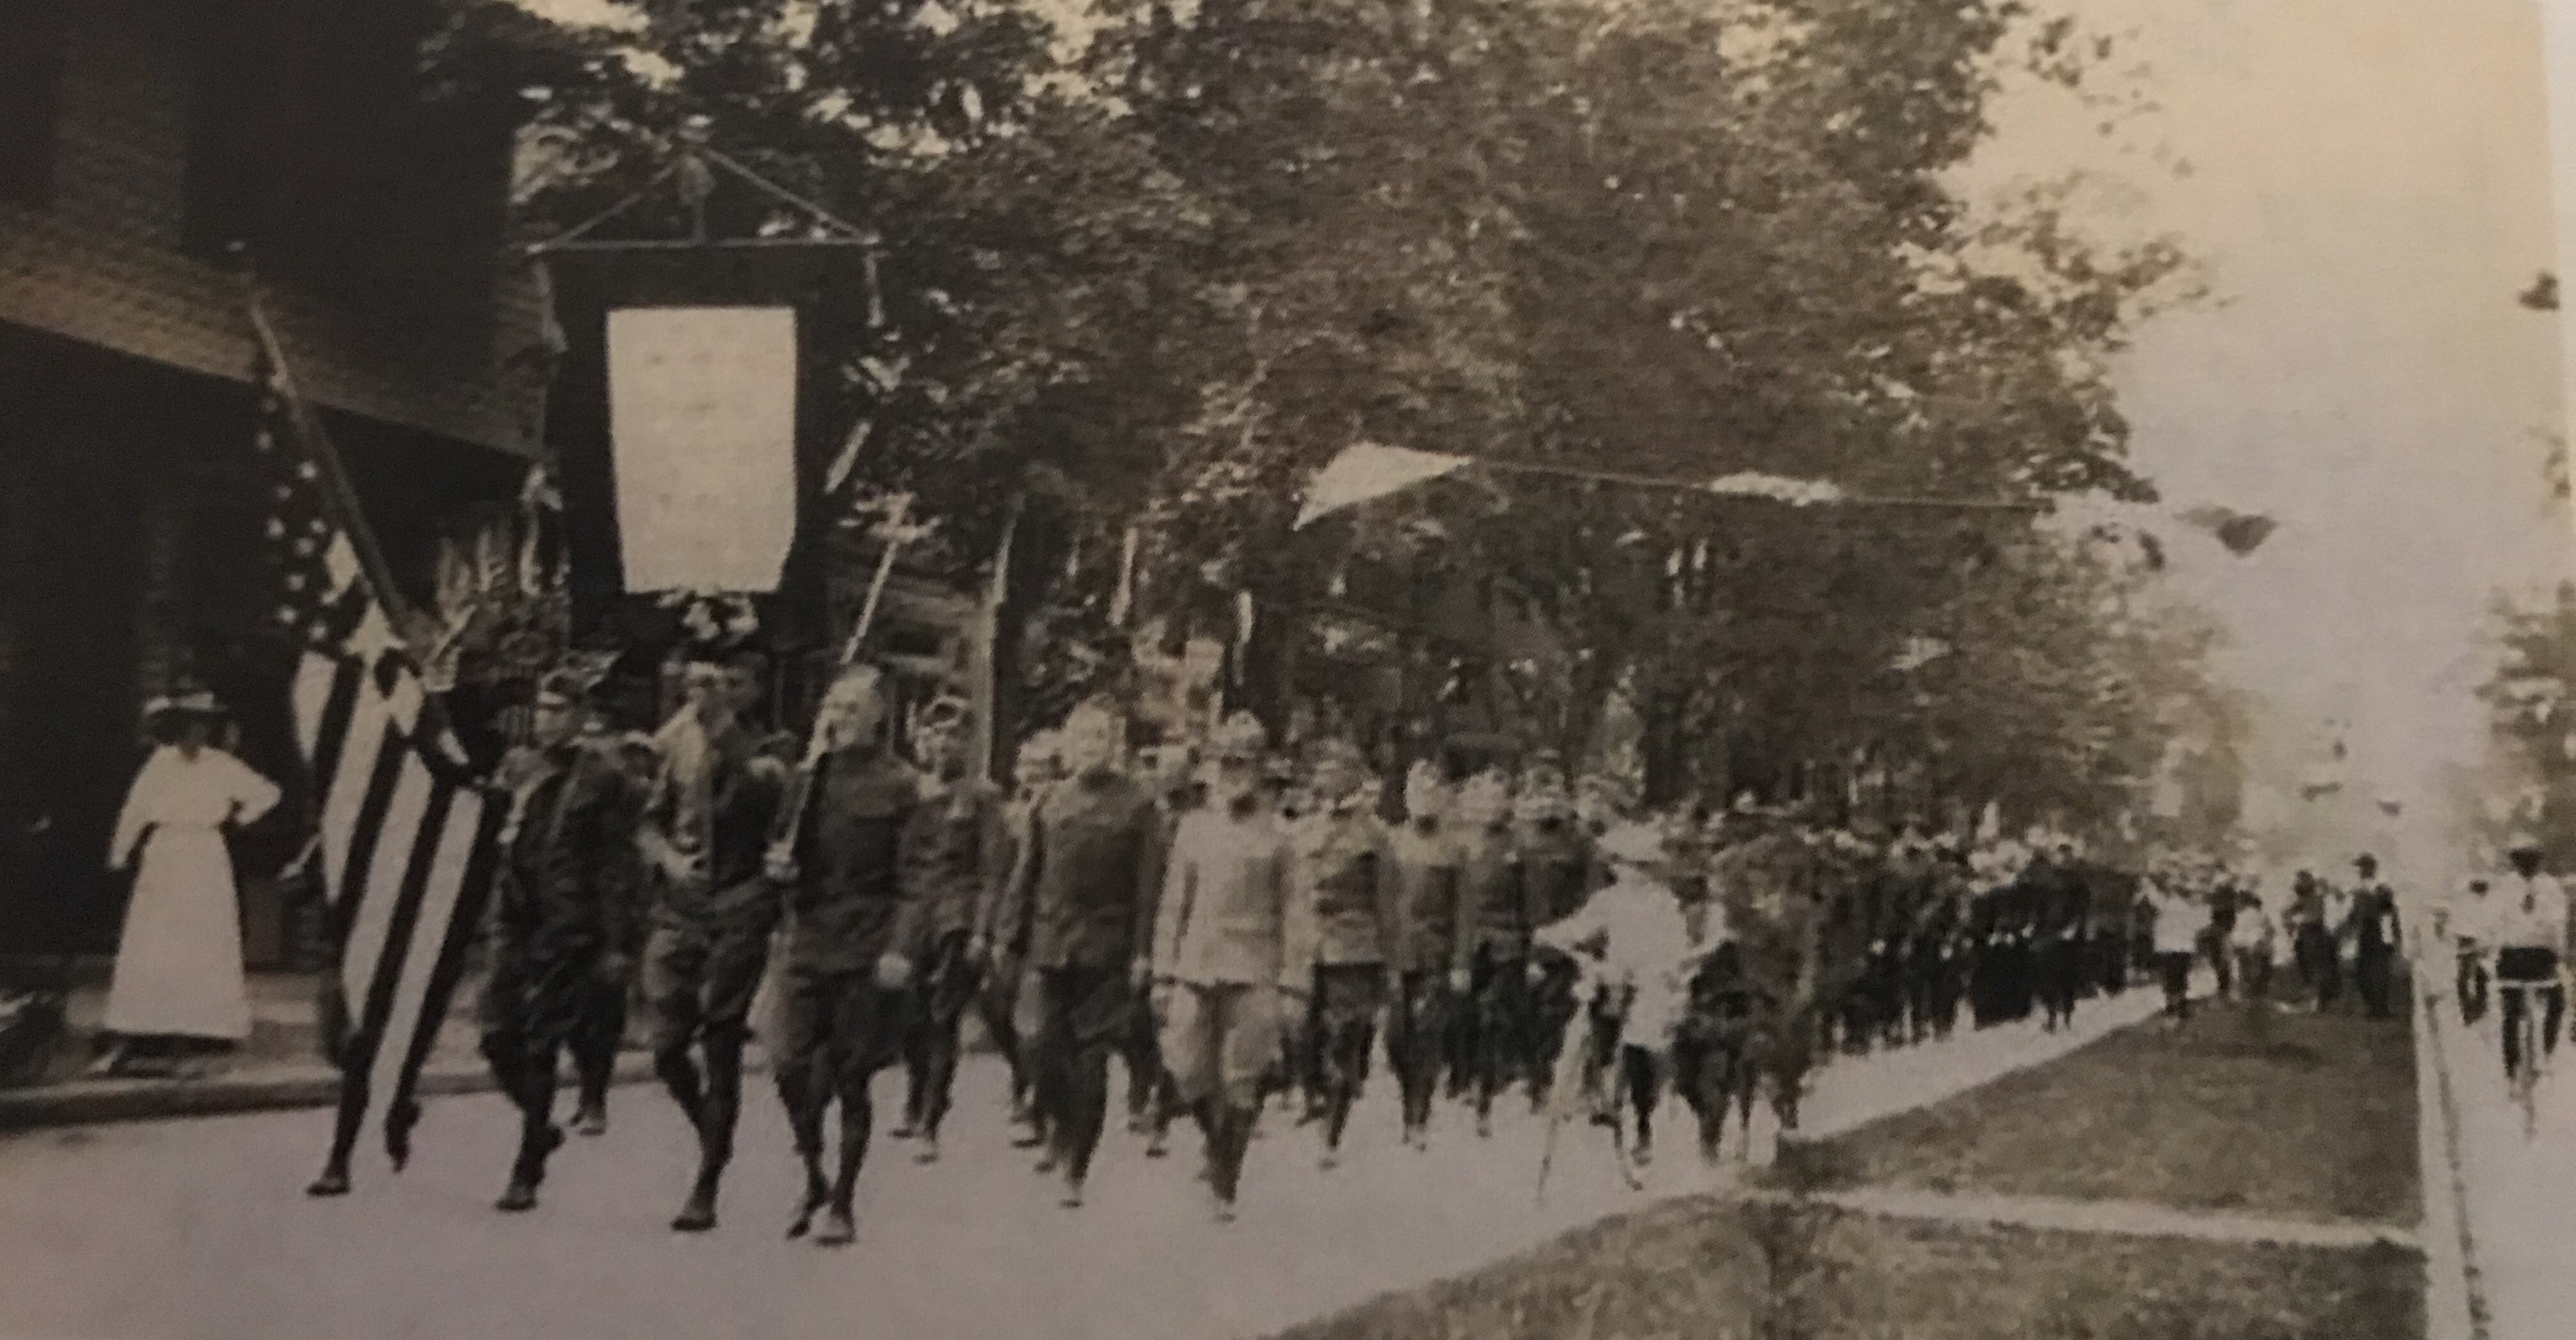 A service flag on parade in Lakewood, May 30, 1919. (Photo: Lakewood Historical Society)